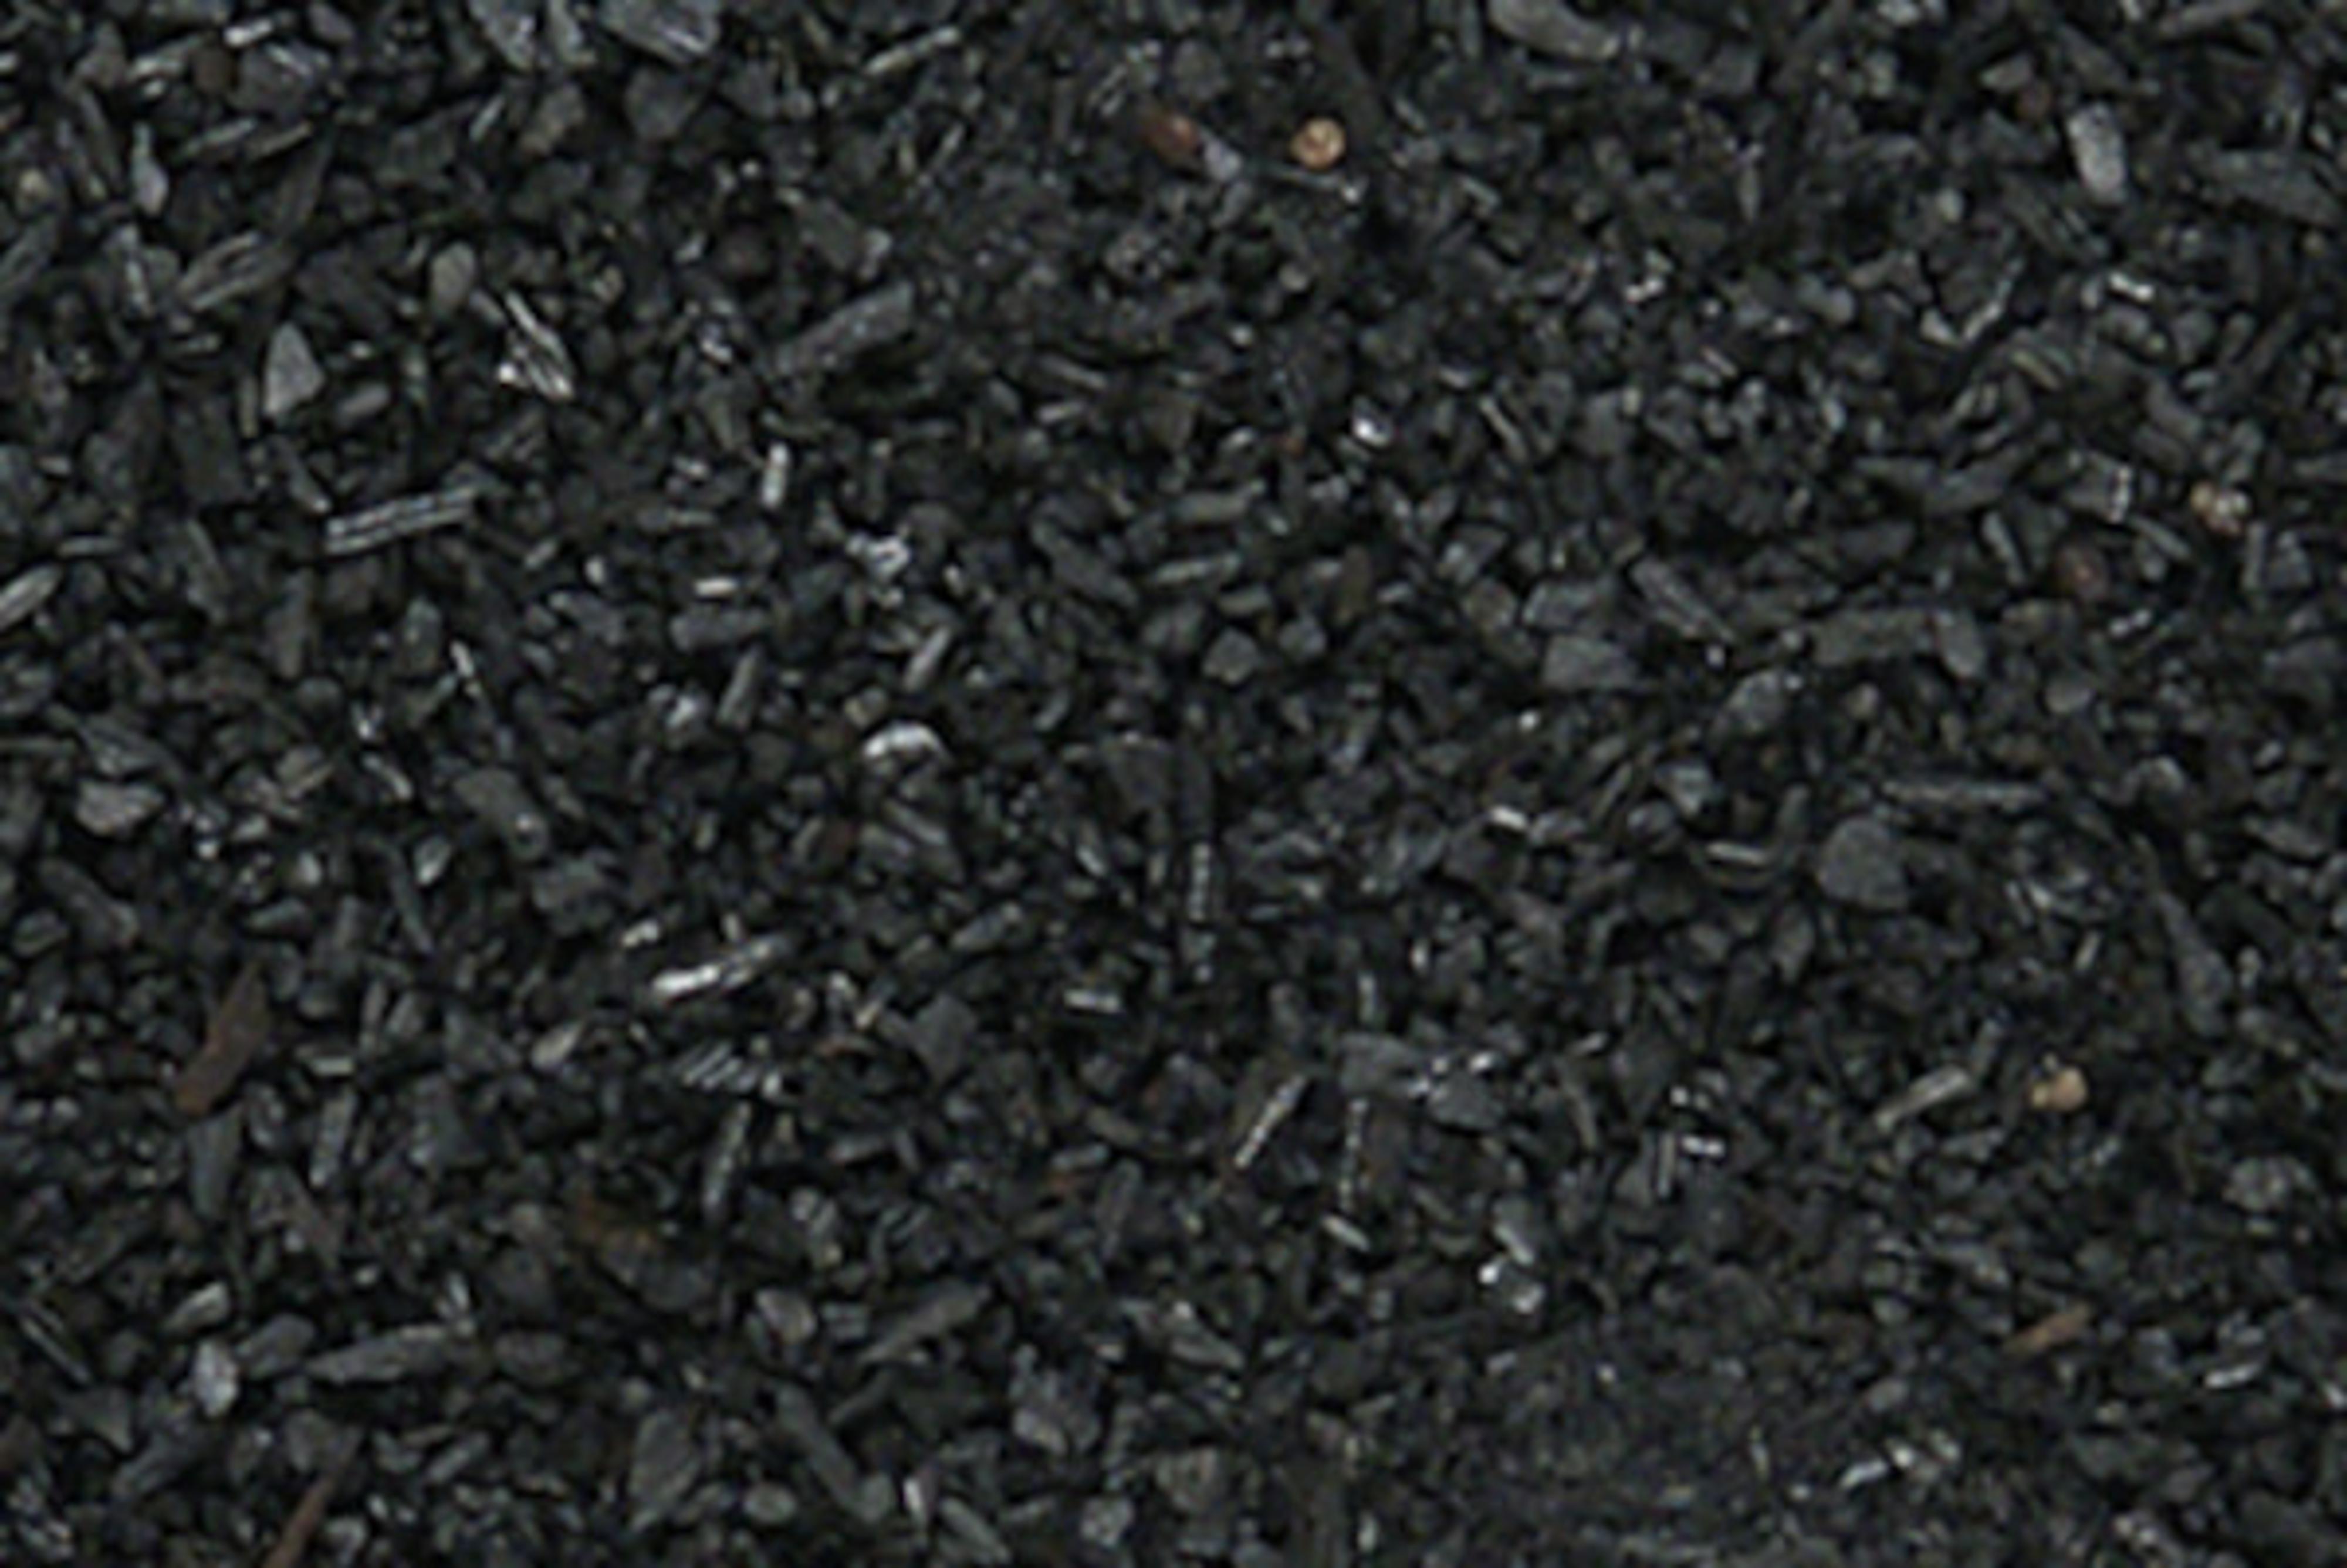 Ballast - Mine Run Coal